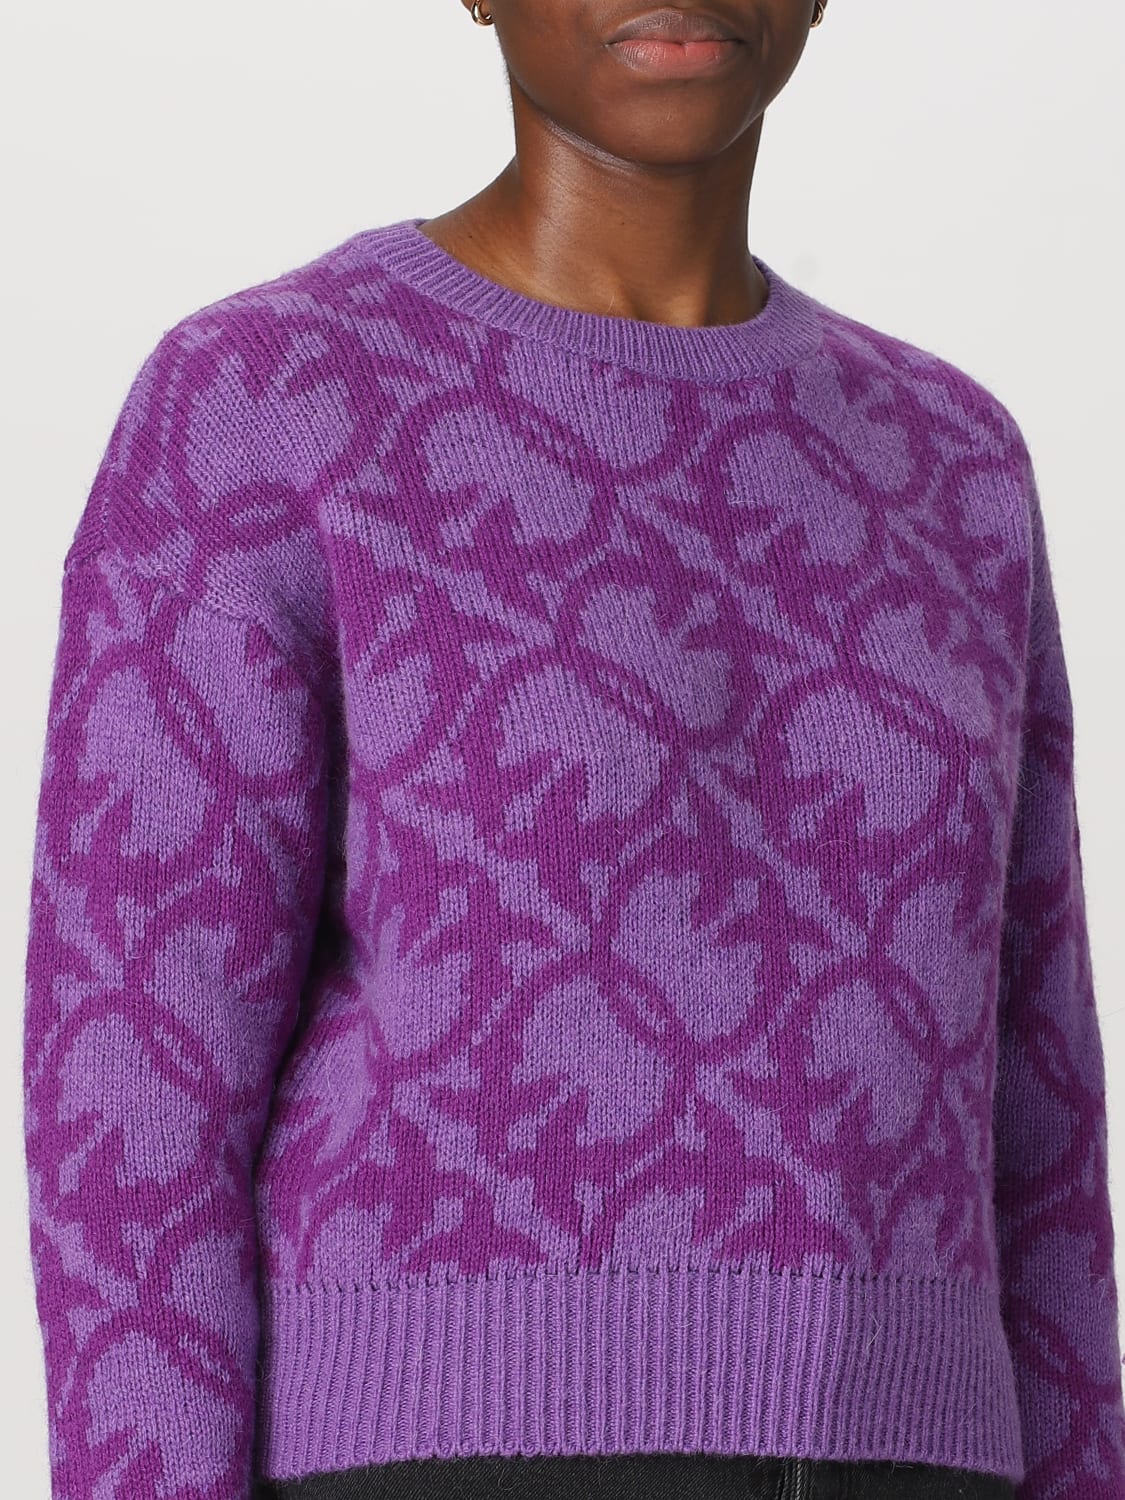 Louis Vuitton Knitwear for Women - Vestiaire Collective